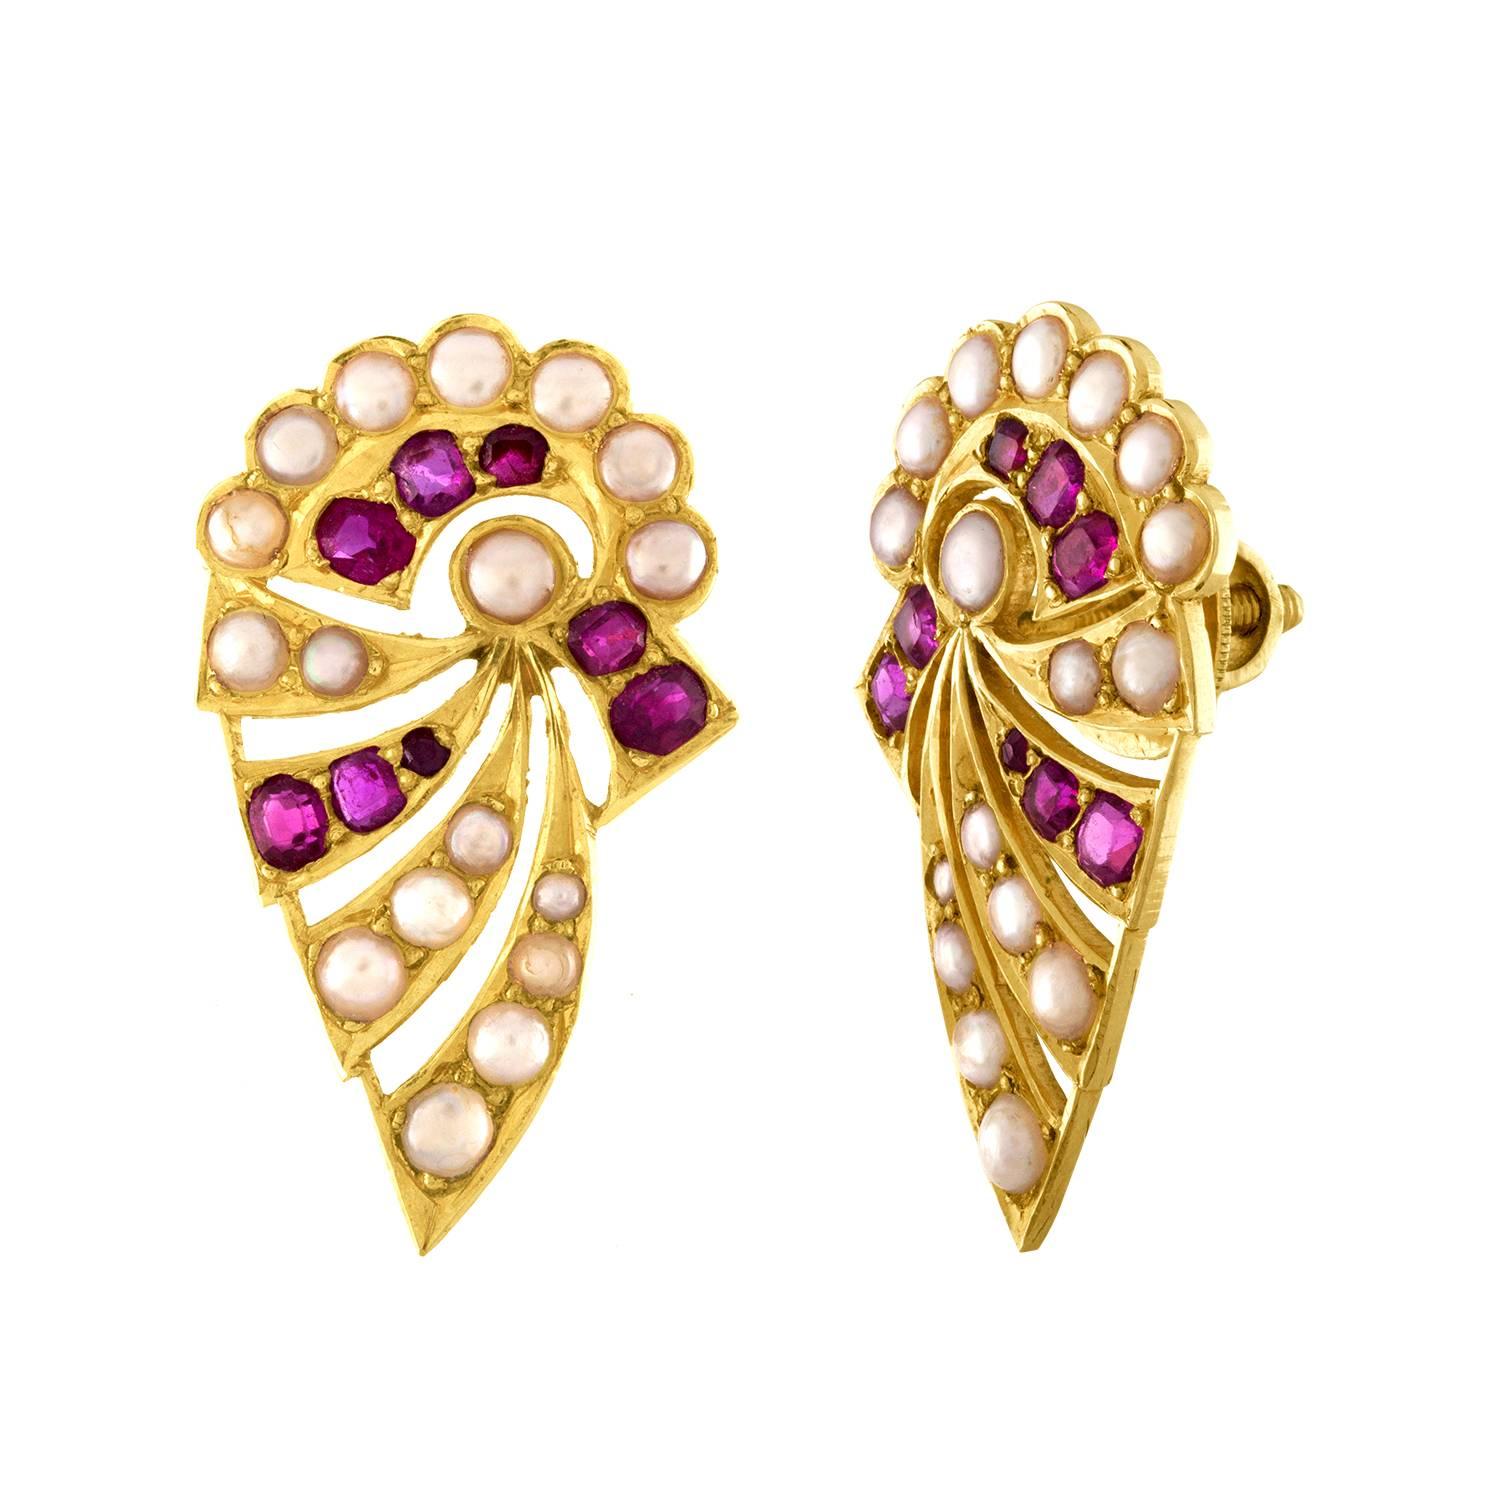 Burma Rubies and Pearls Gold Earrings